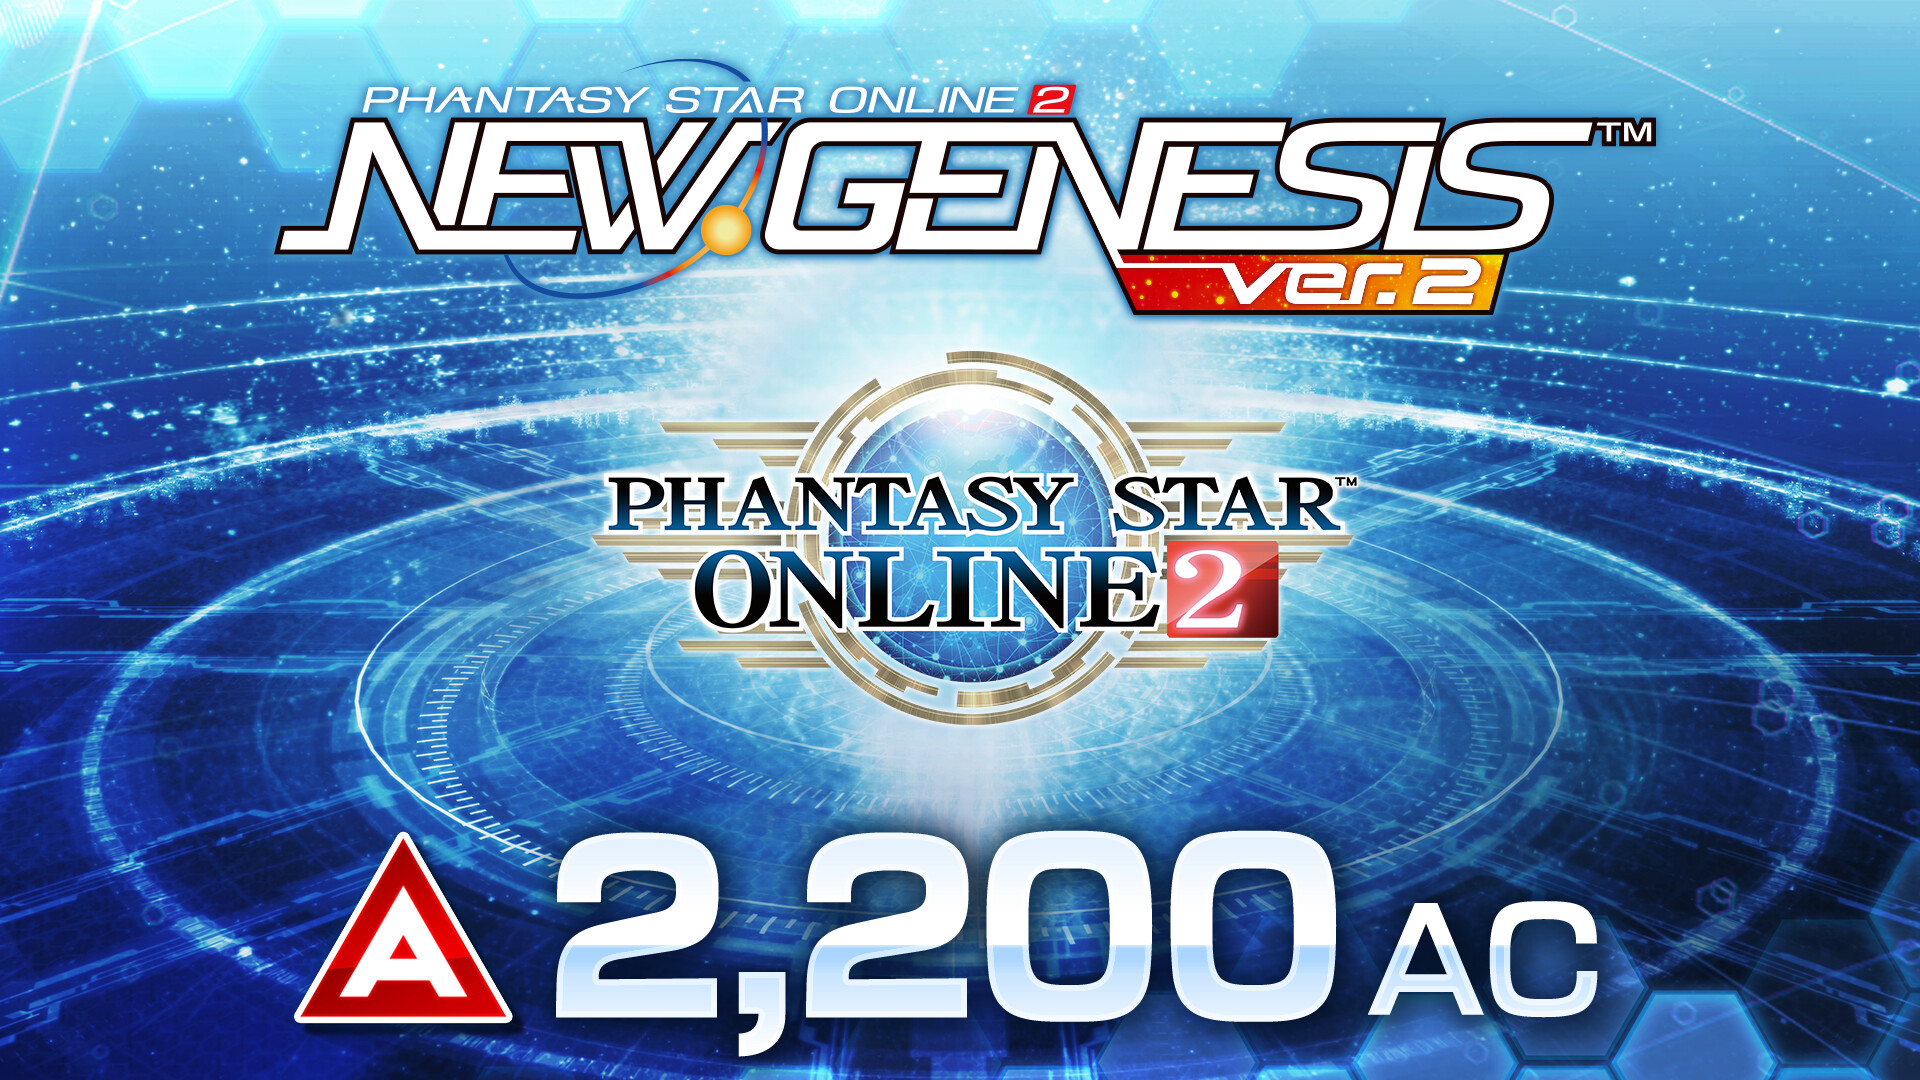 Phantasy Star Online 2 New Genesis - [SALE] 2200AC Exchange Ticket Featured Screenshot #1